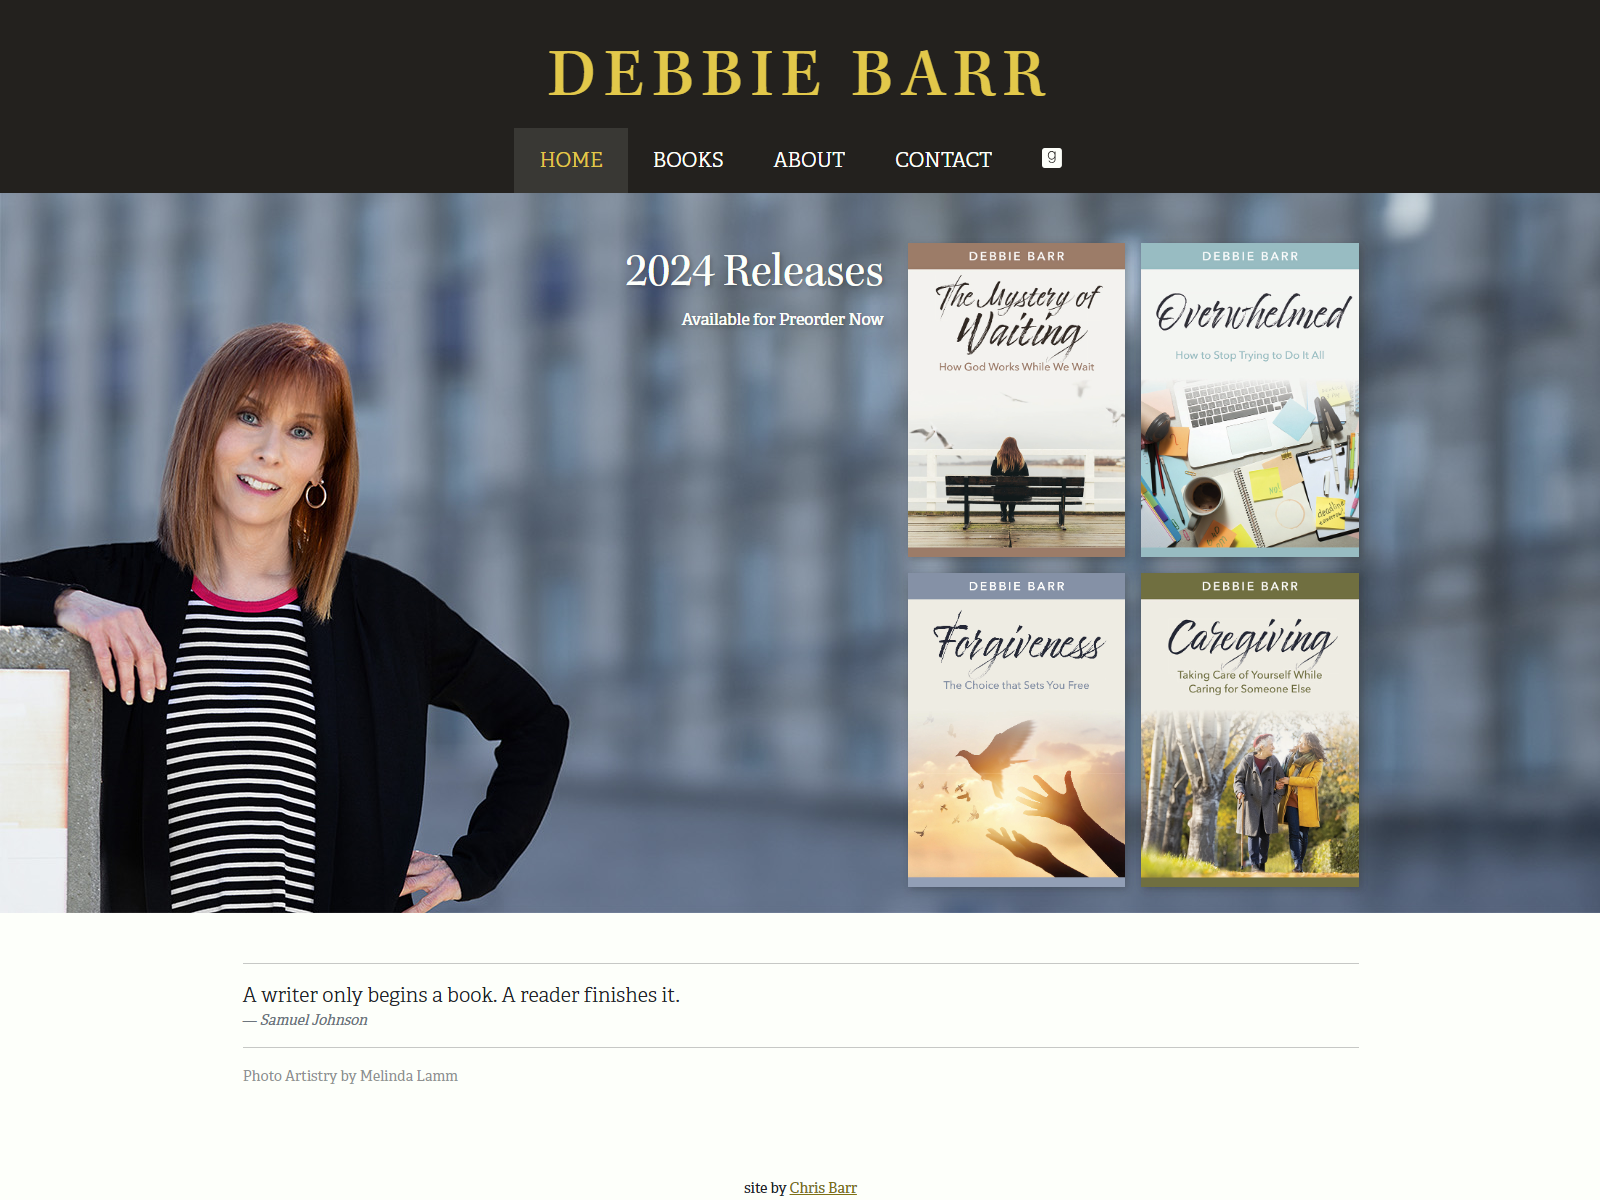 DebbieBarr.com - Home Page | Desktop